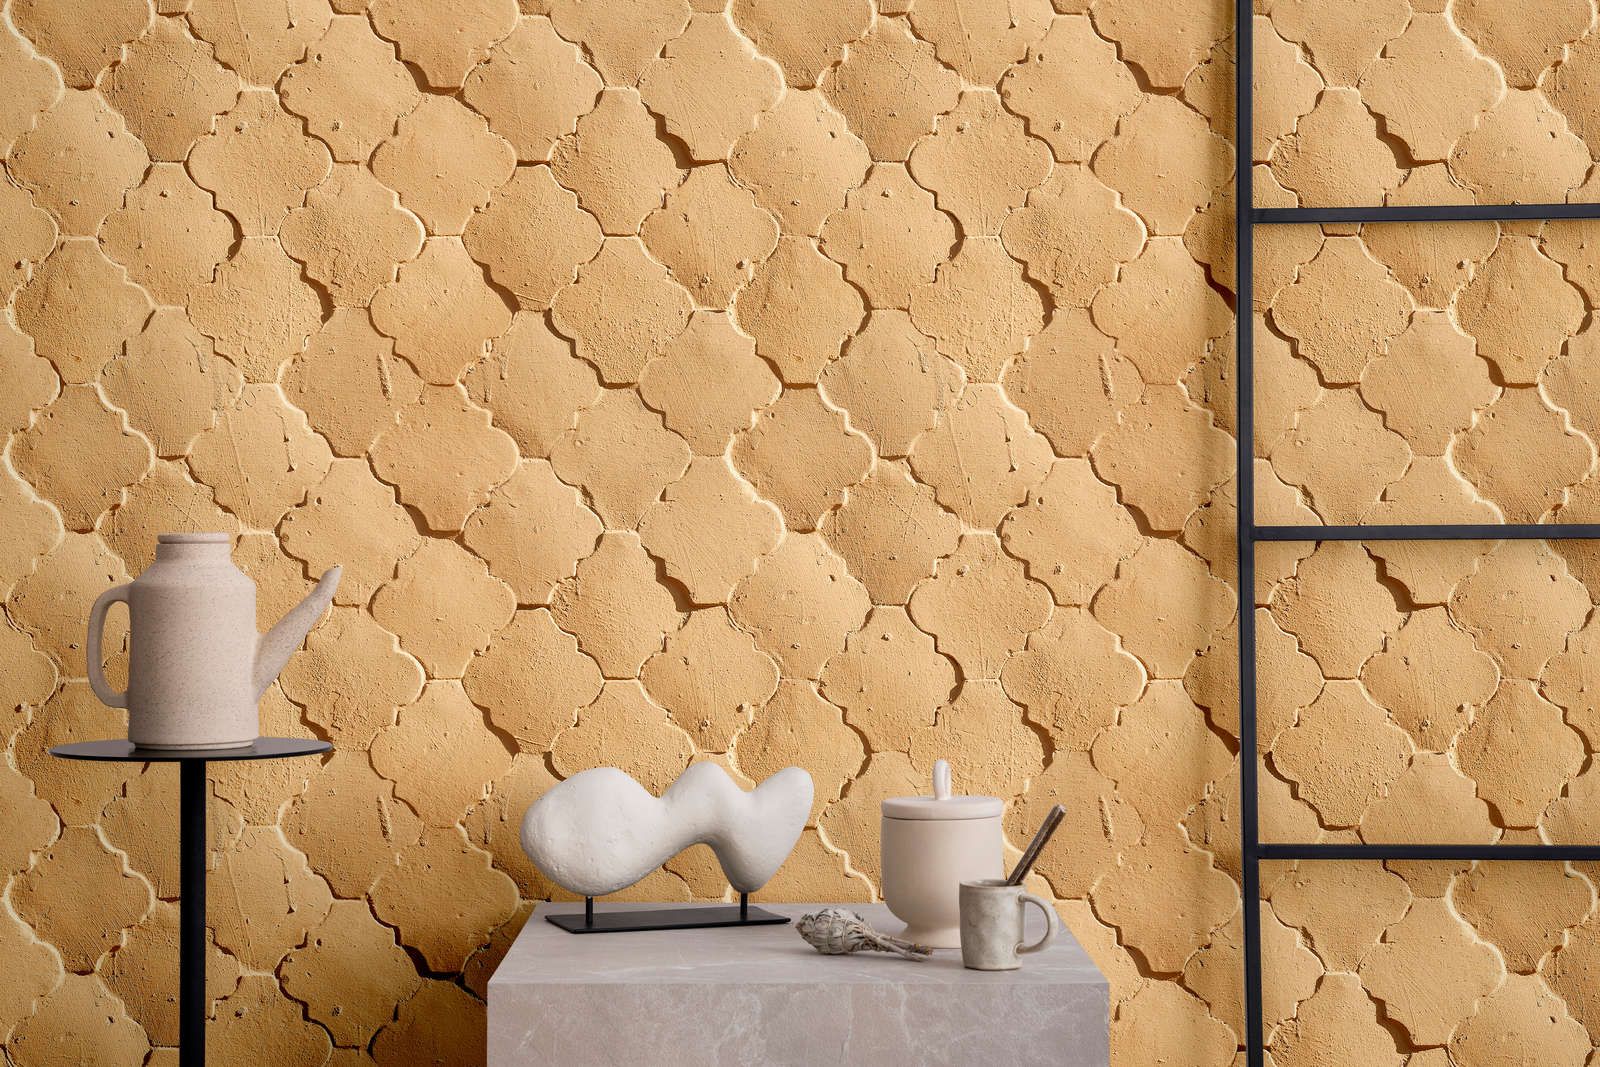             Photo wallpaper »siena« - Mediterranean tile pattern in sand colours - Matt, smooth non-woven fabric
        